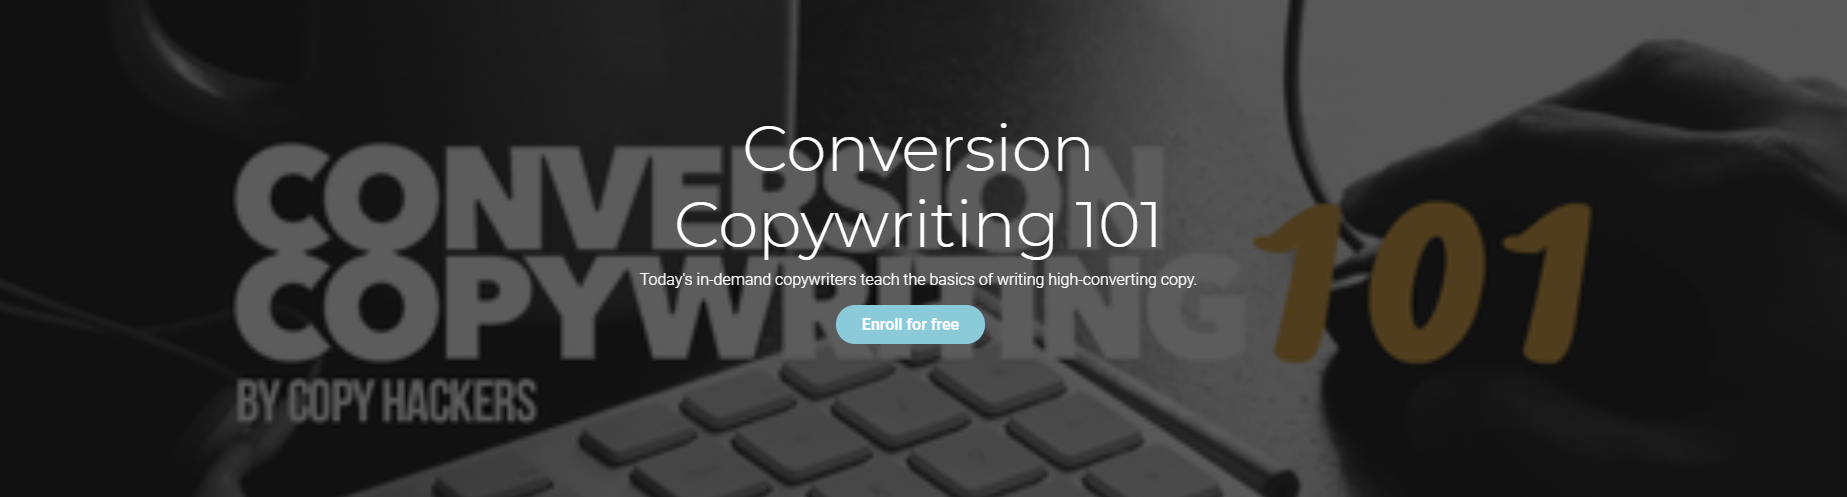 Conversion Copywriting 101 1